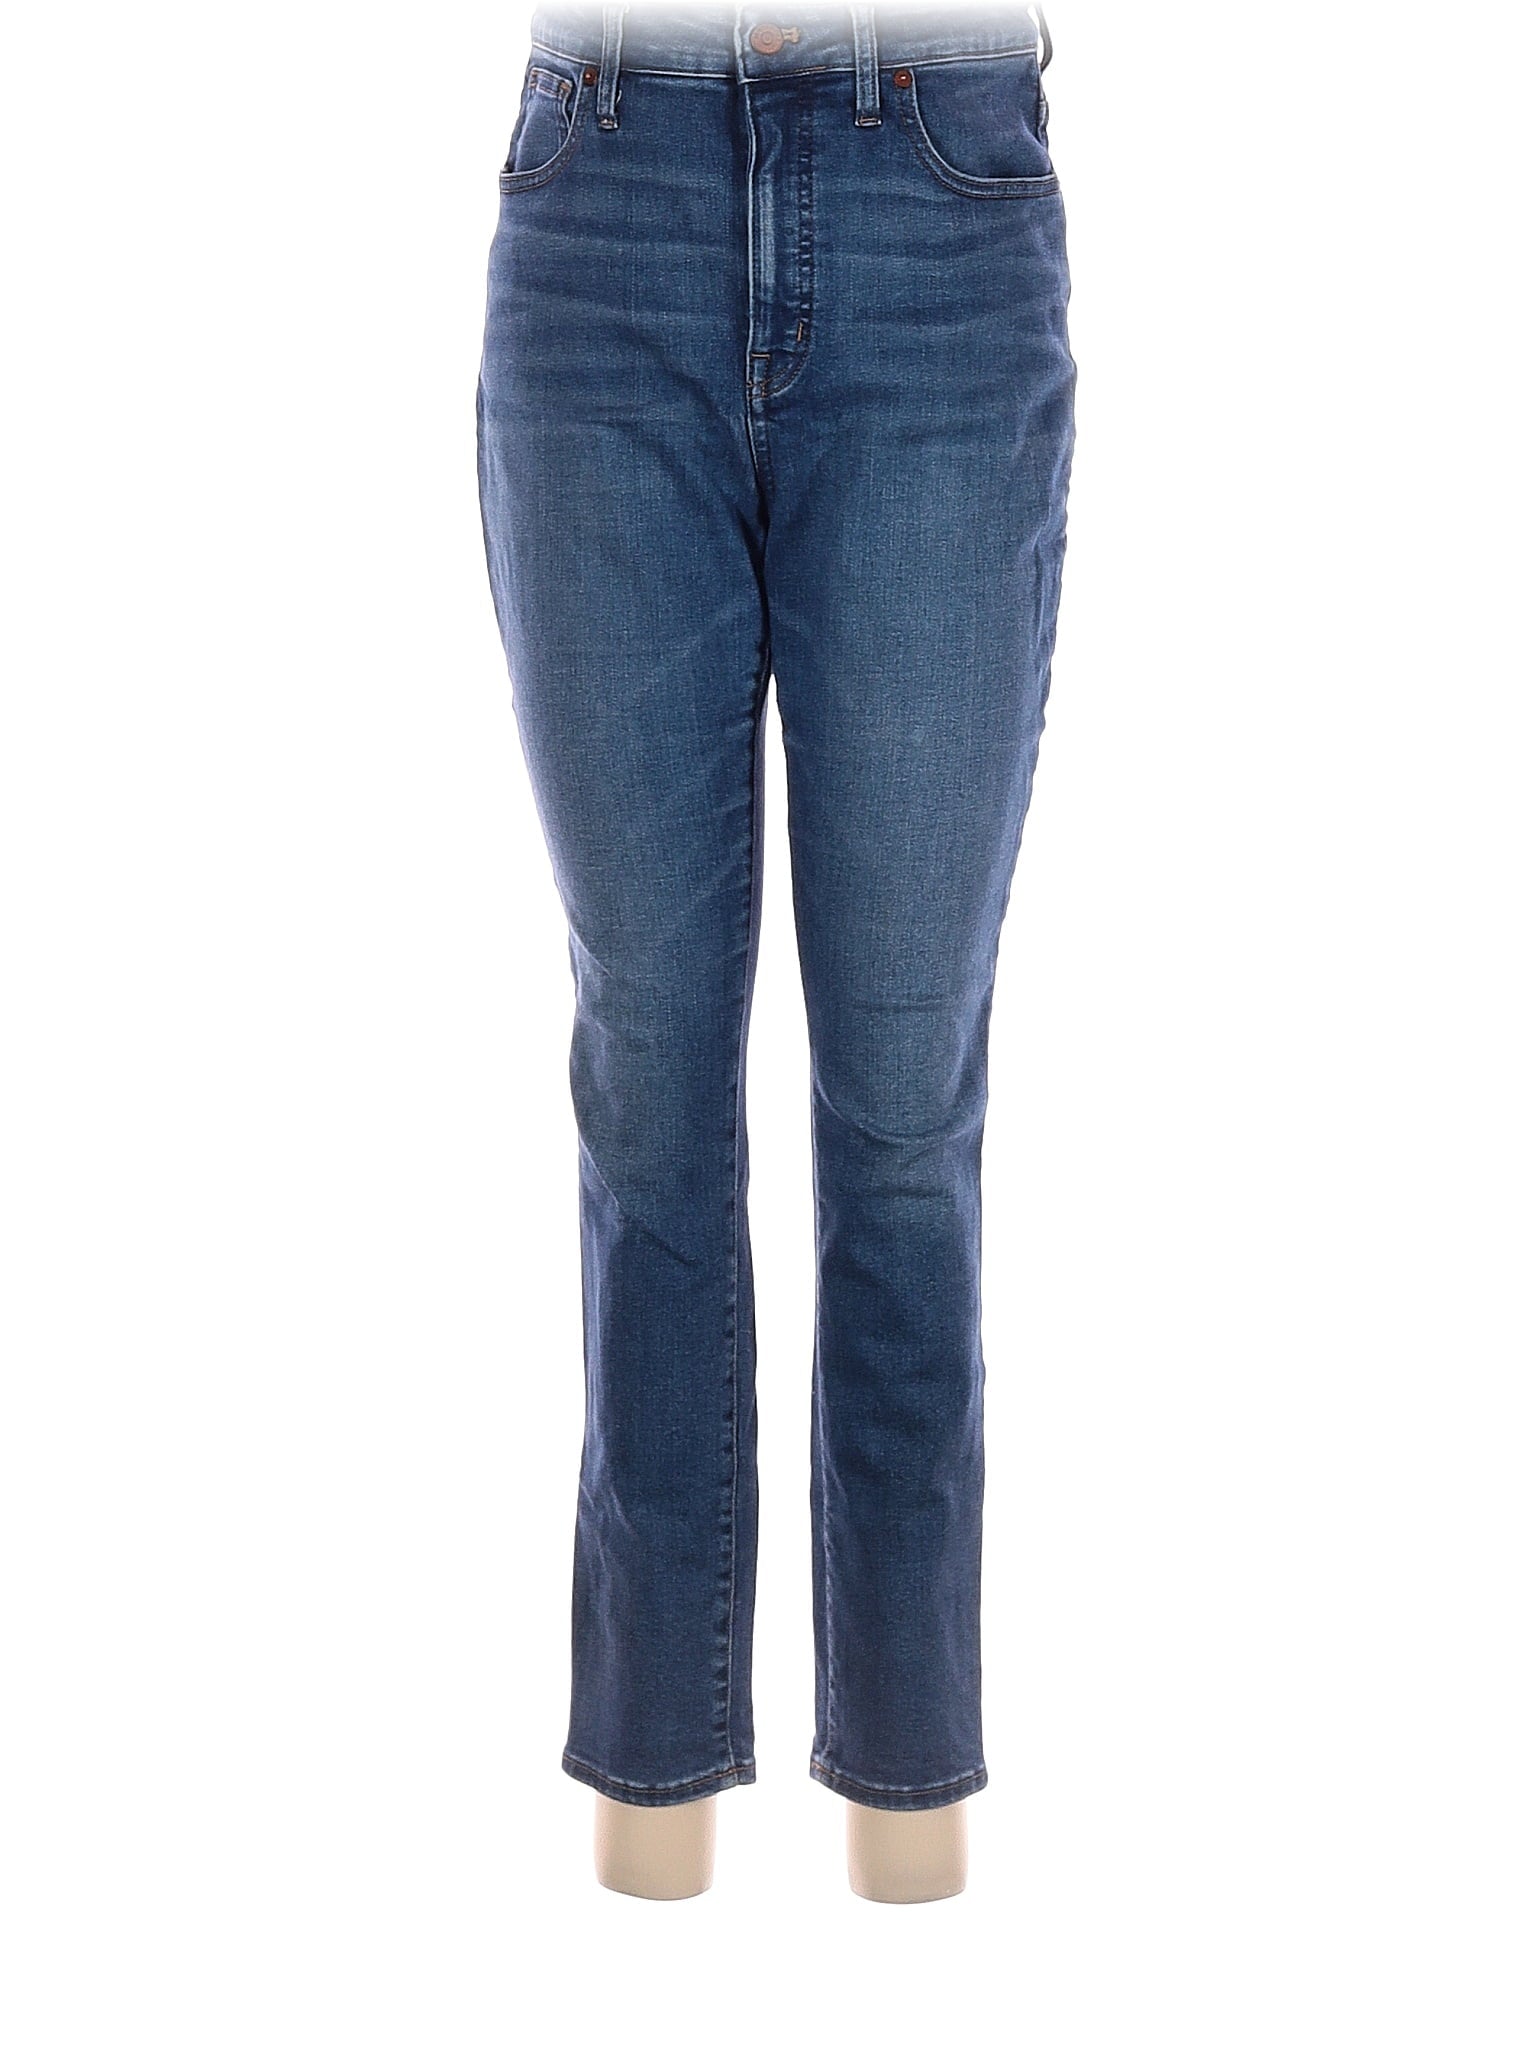 High-Rise Skinny Jeans in Dark Wash waist size - 29